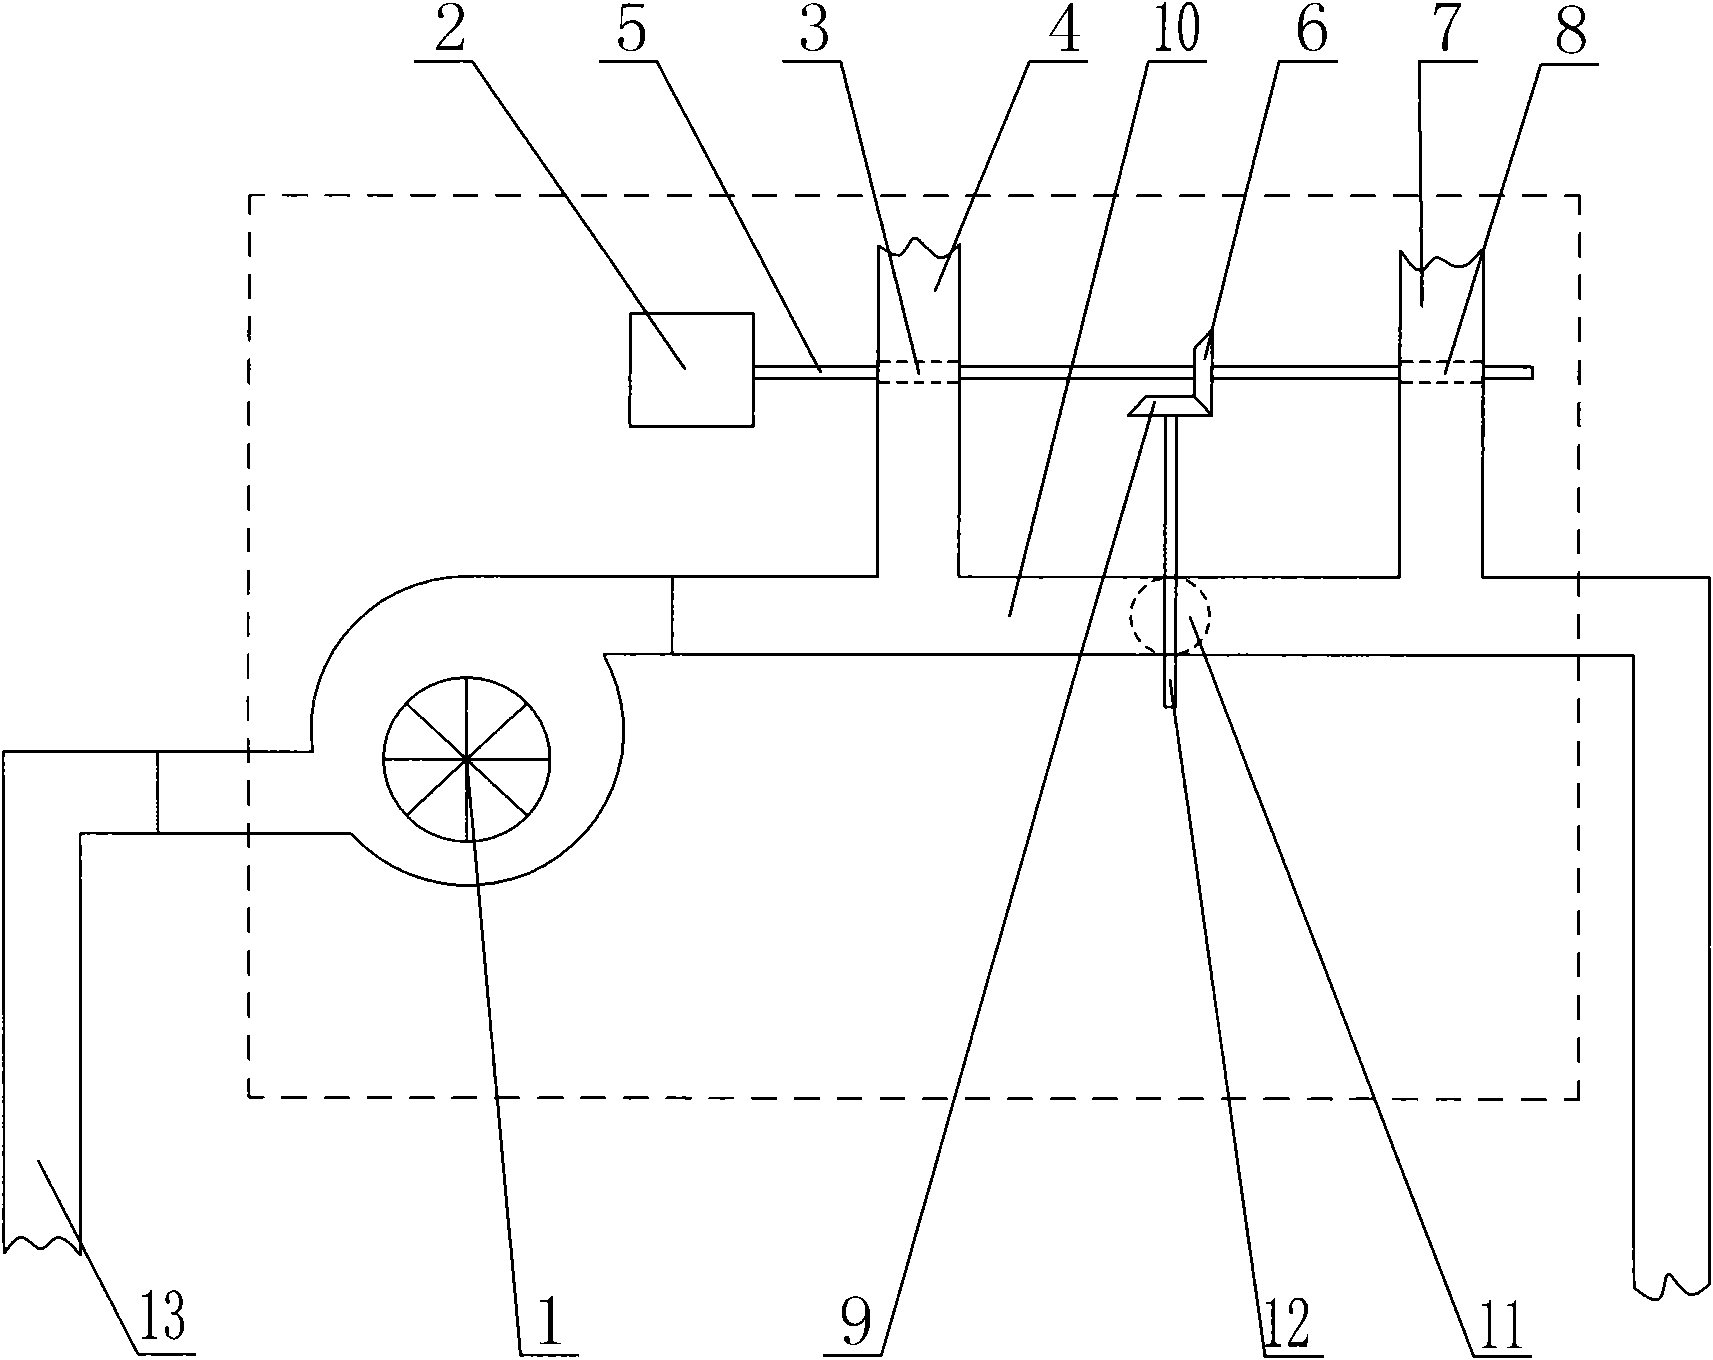 Circulating ventilation fan system